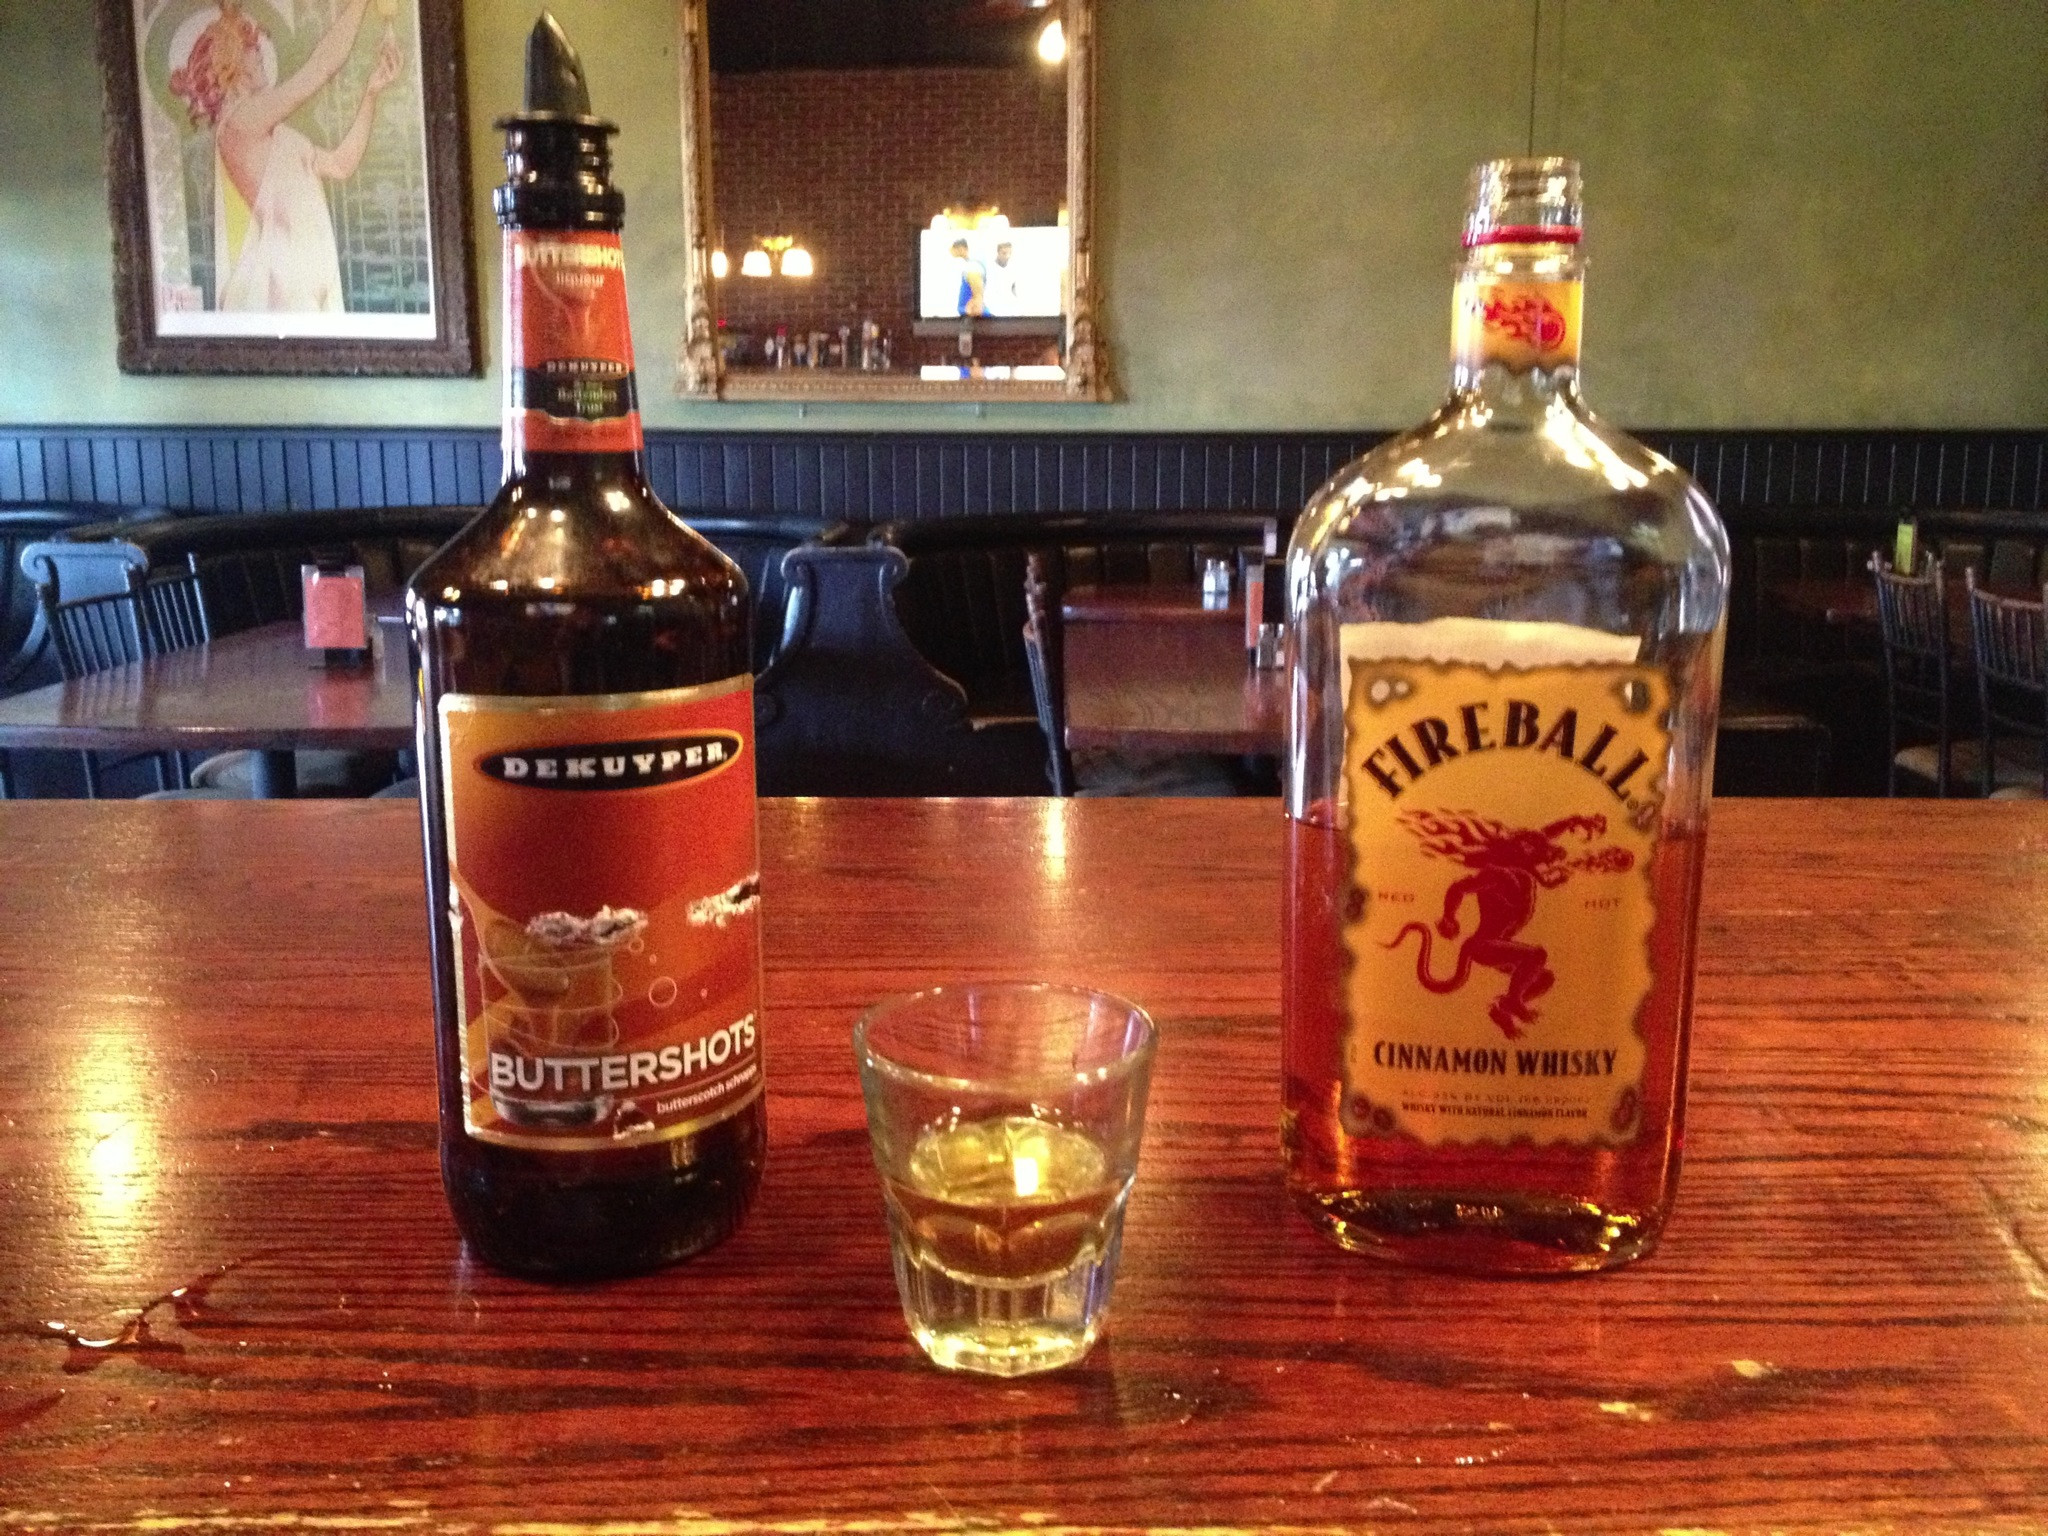 Fireball whiskey and butterscotch schnapps